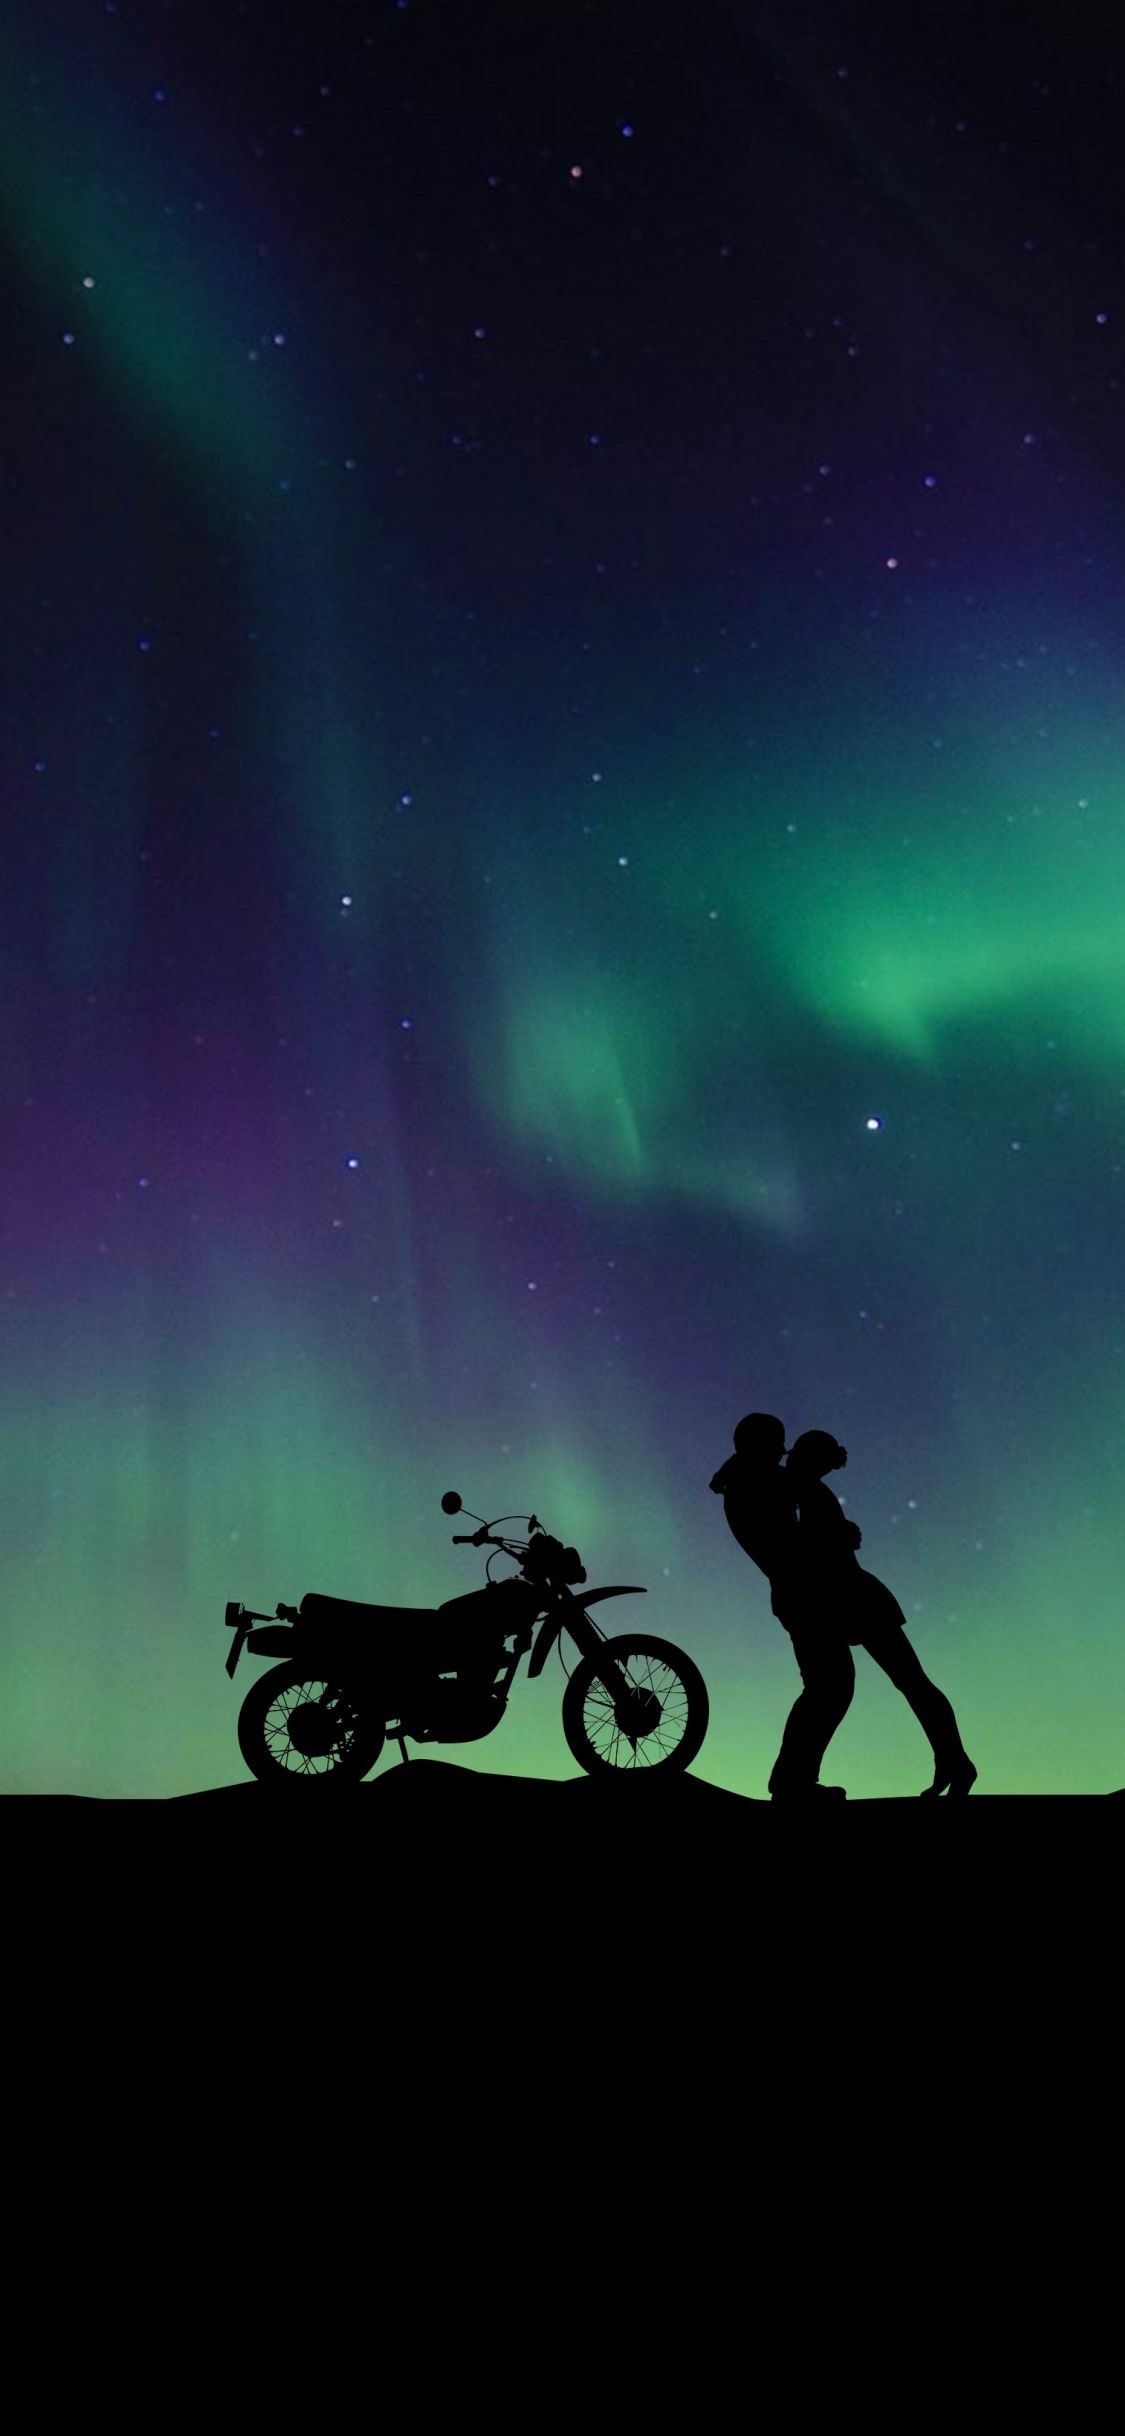 Download 1125x2436 wallpaper couple, aurora borealis, motorcycle, hug, iphone x 1125x2436 HD image, background, 8075